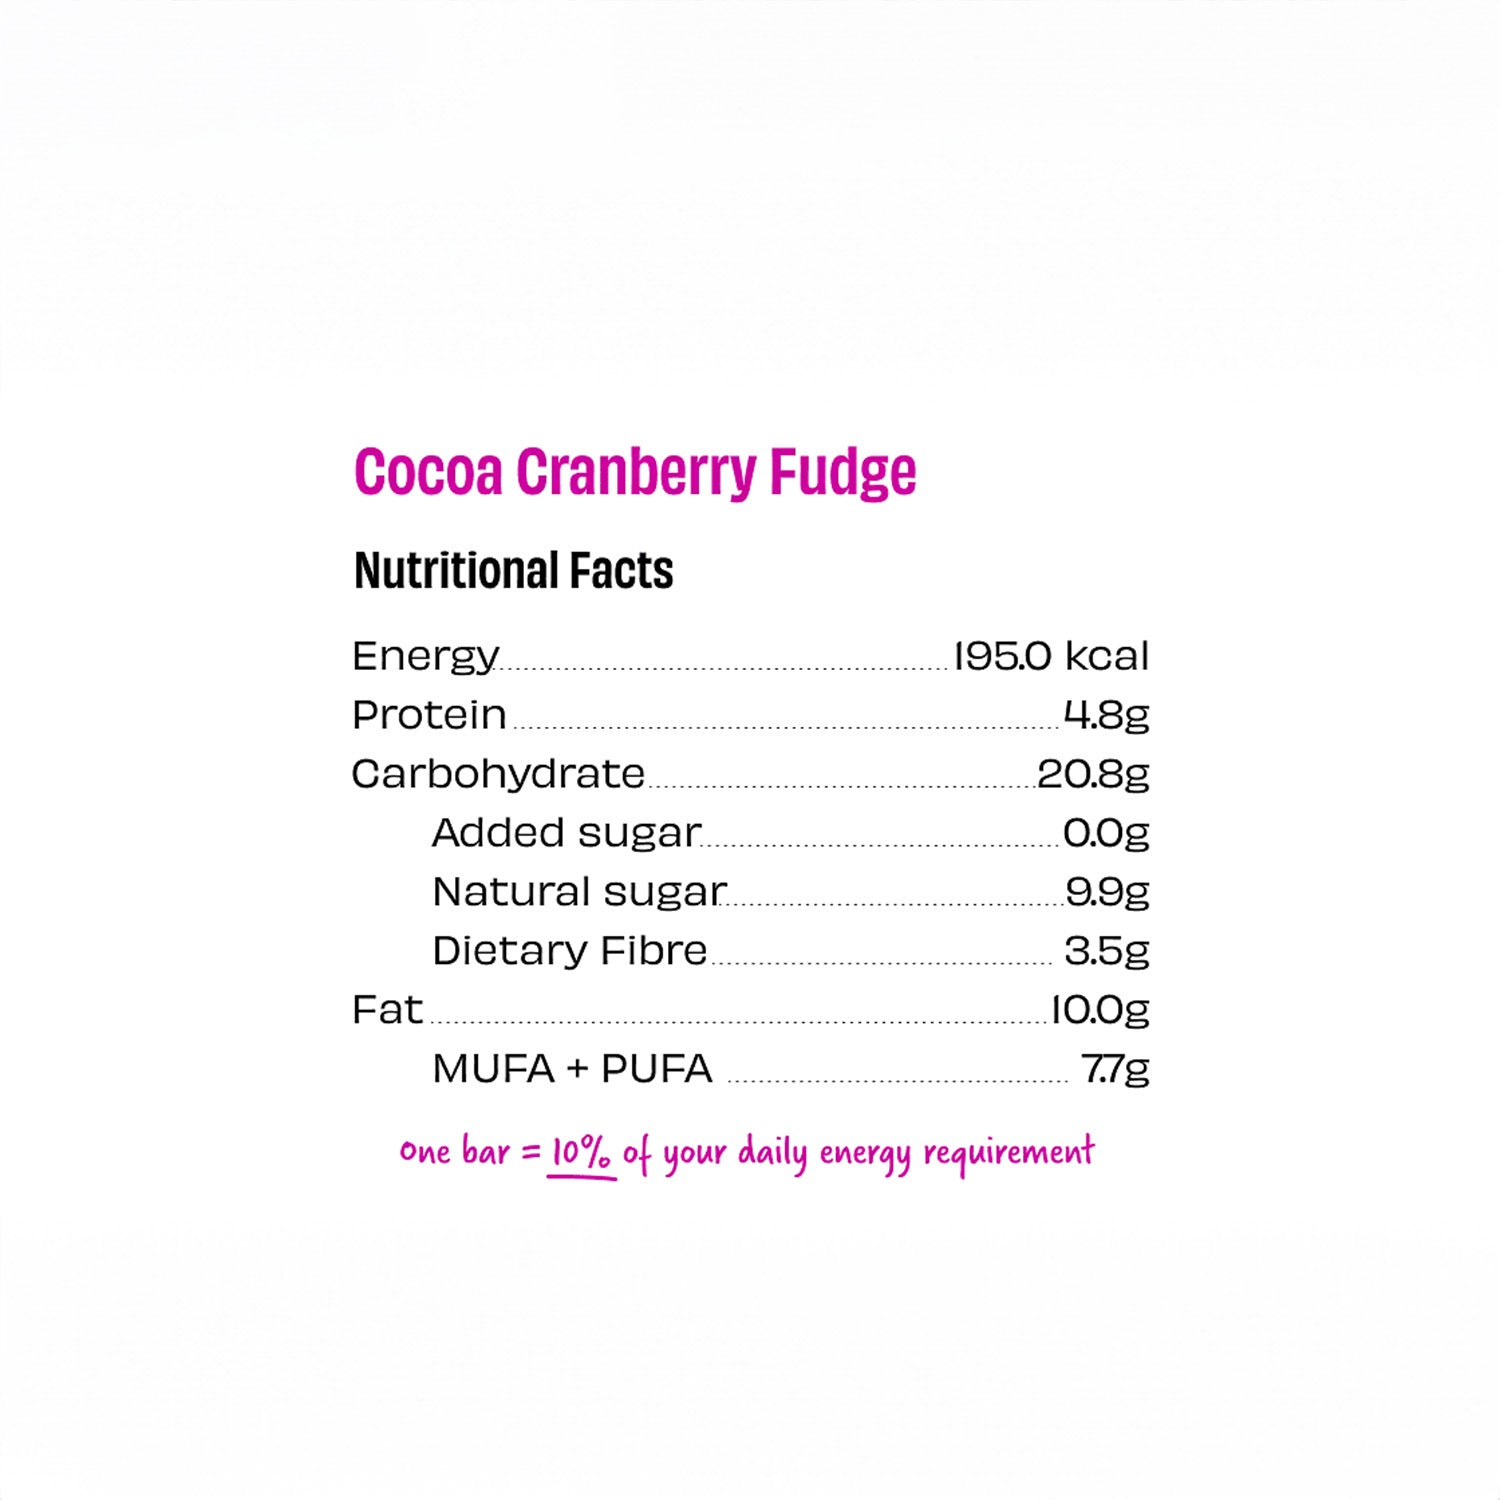 Cocoa Cranberry Fudge